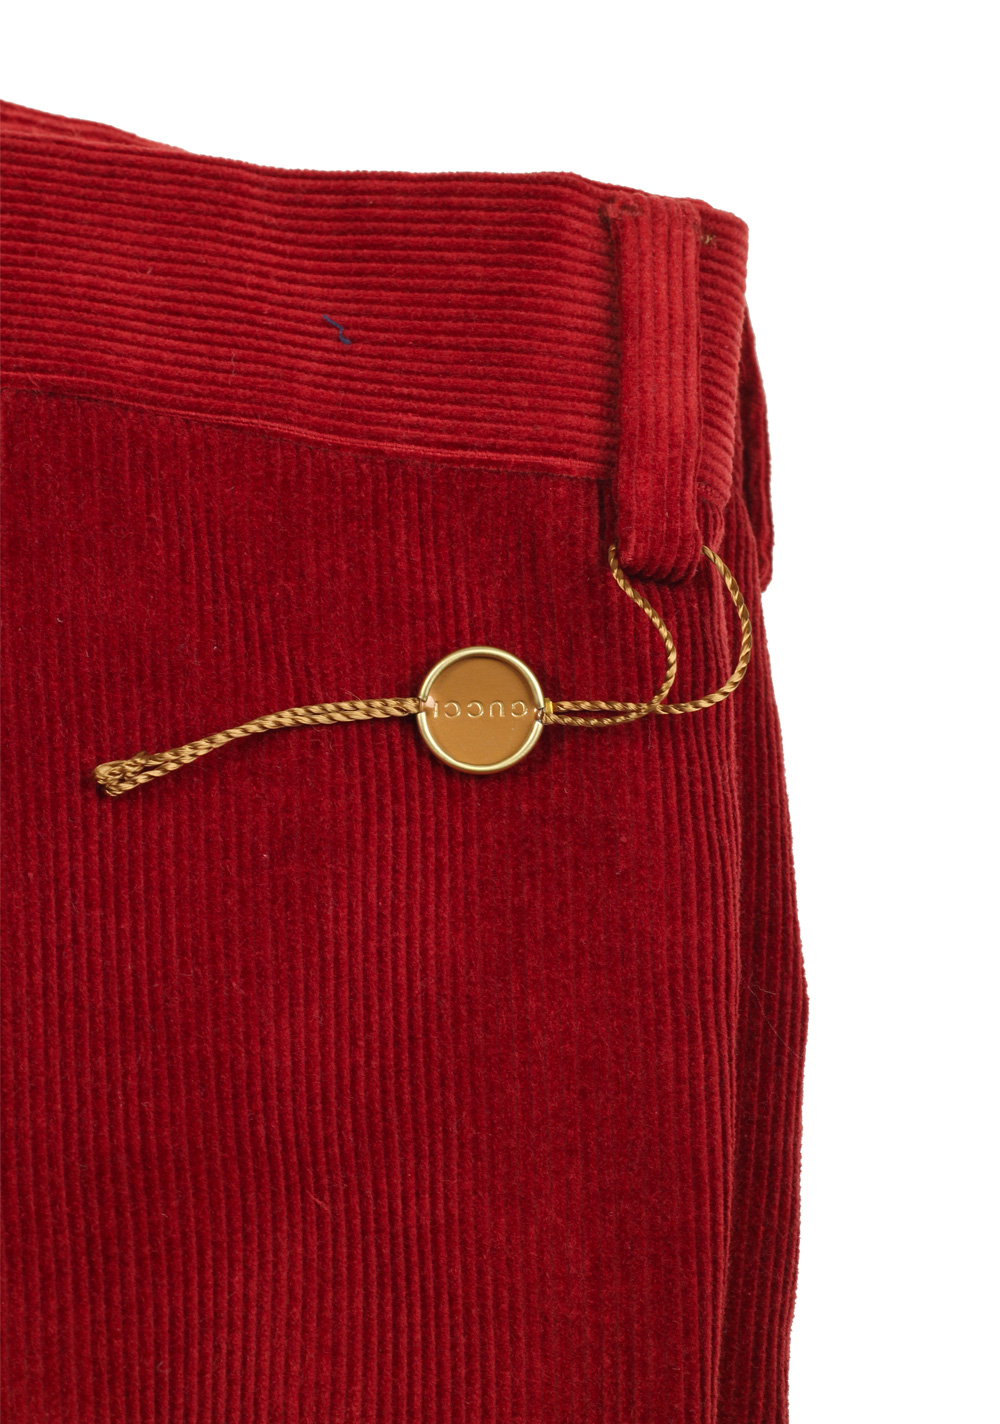 Gucci Red Corduroy Trousers Size 52 / 36 U.S | Costume Limité